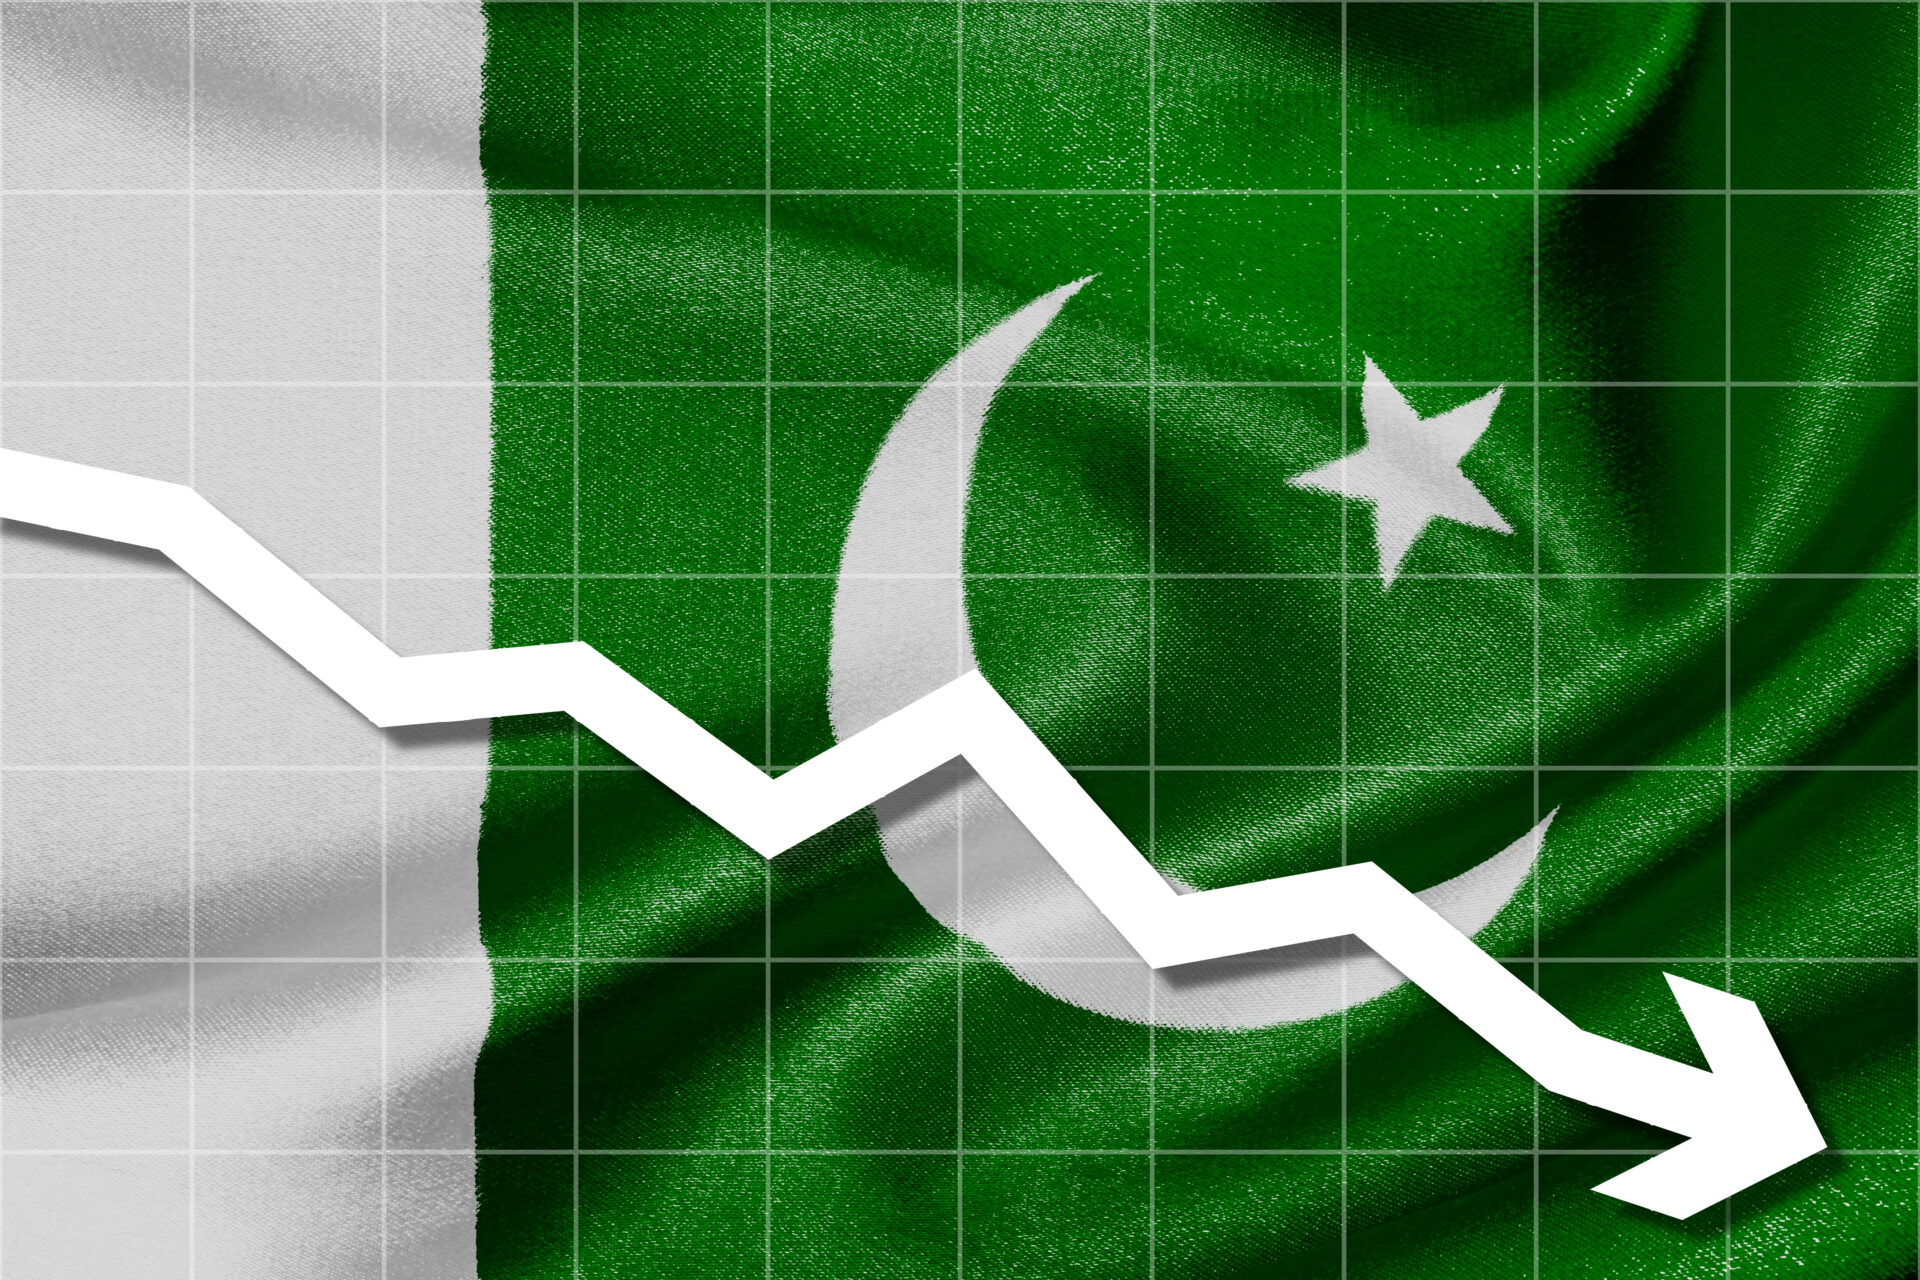 White,Arrow,Down,On,The,Flag,Of,Pakistan,As,Background